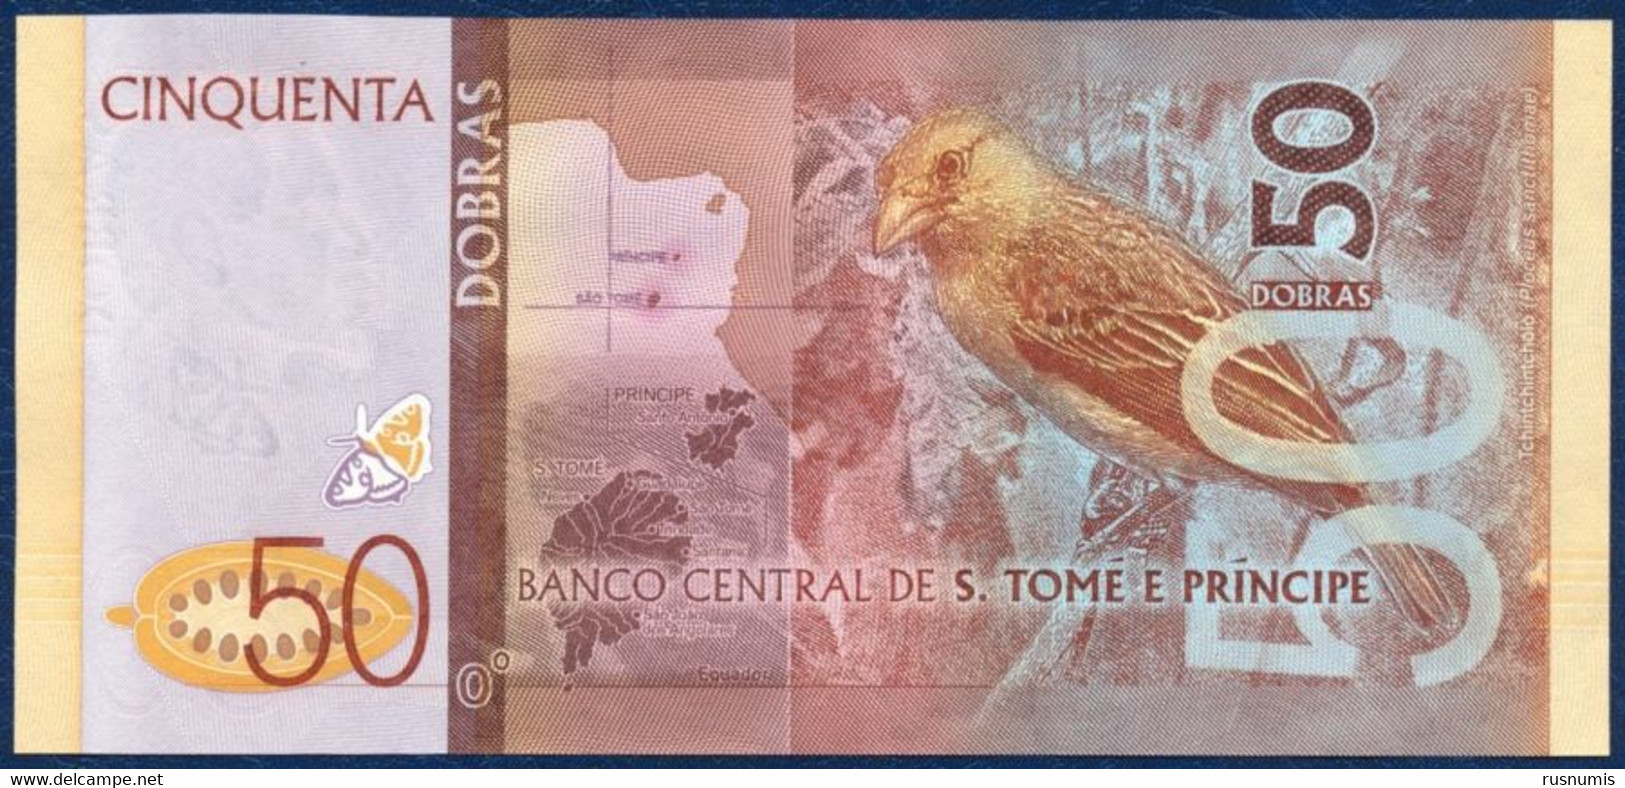 SAN TOME - SAO TOME AND PRINCIPE - ST. THOMAS 50 DOBRAS PICK-73 BUTTERFLY BIRD 2016 UNC - San Tomé E Principe